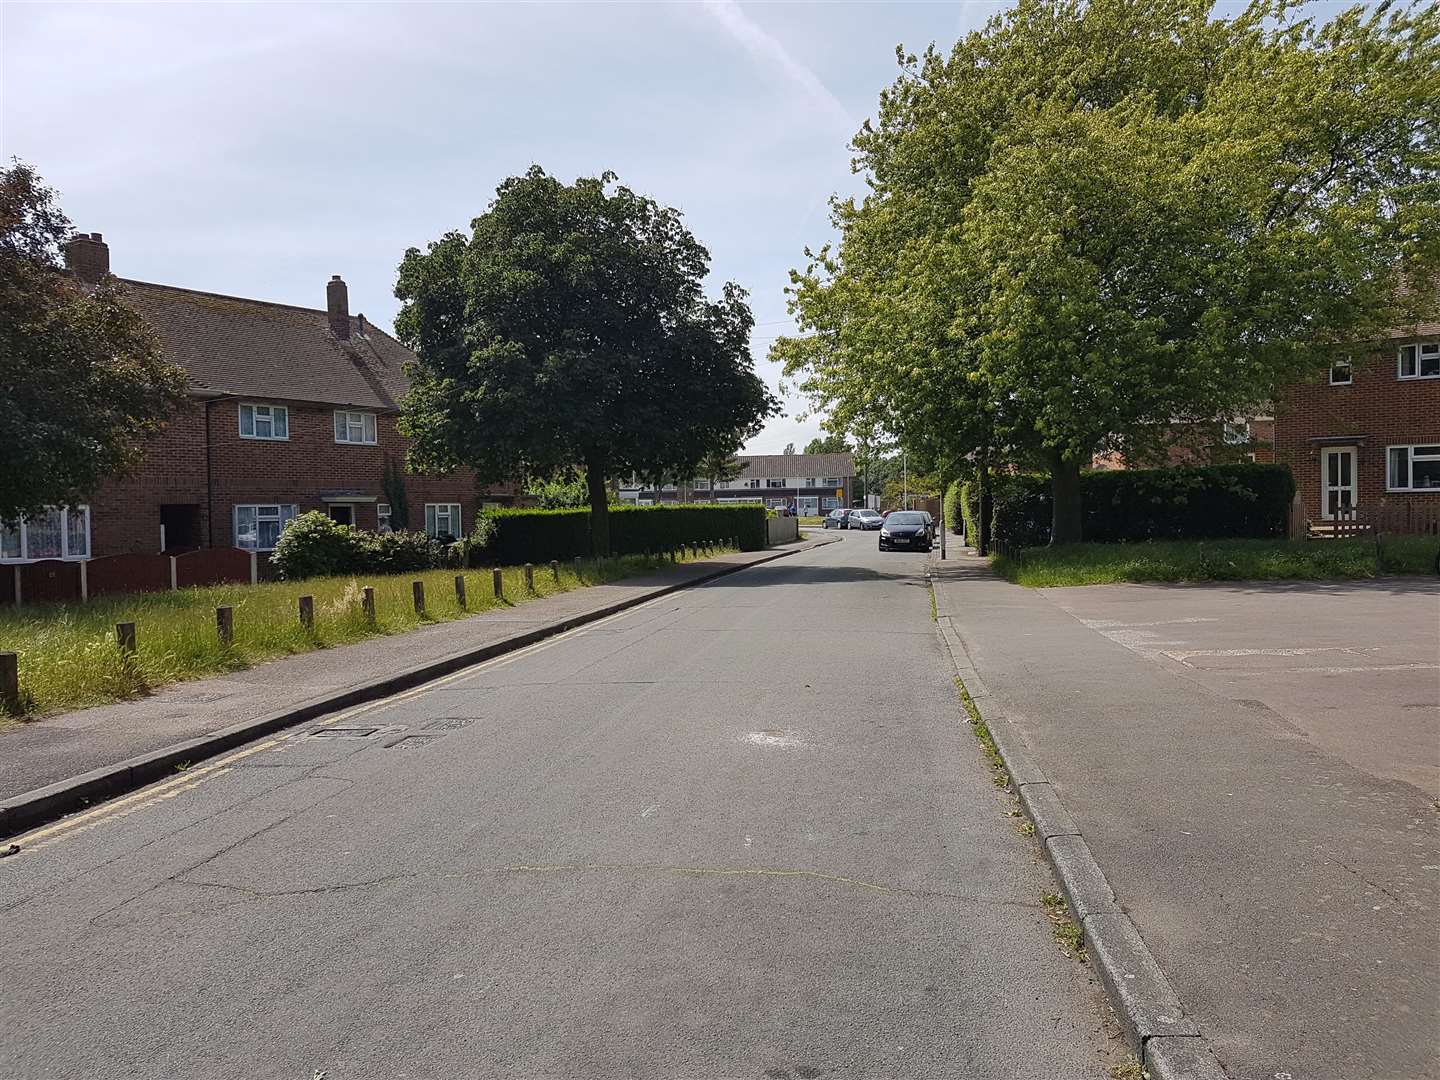 The attack happened in Biggins Wood Road in Folkestone